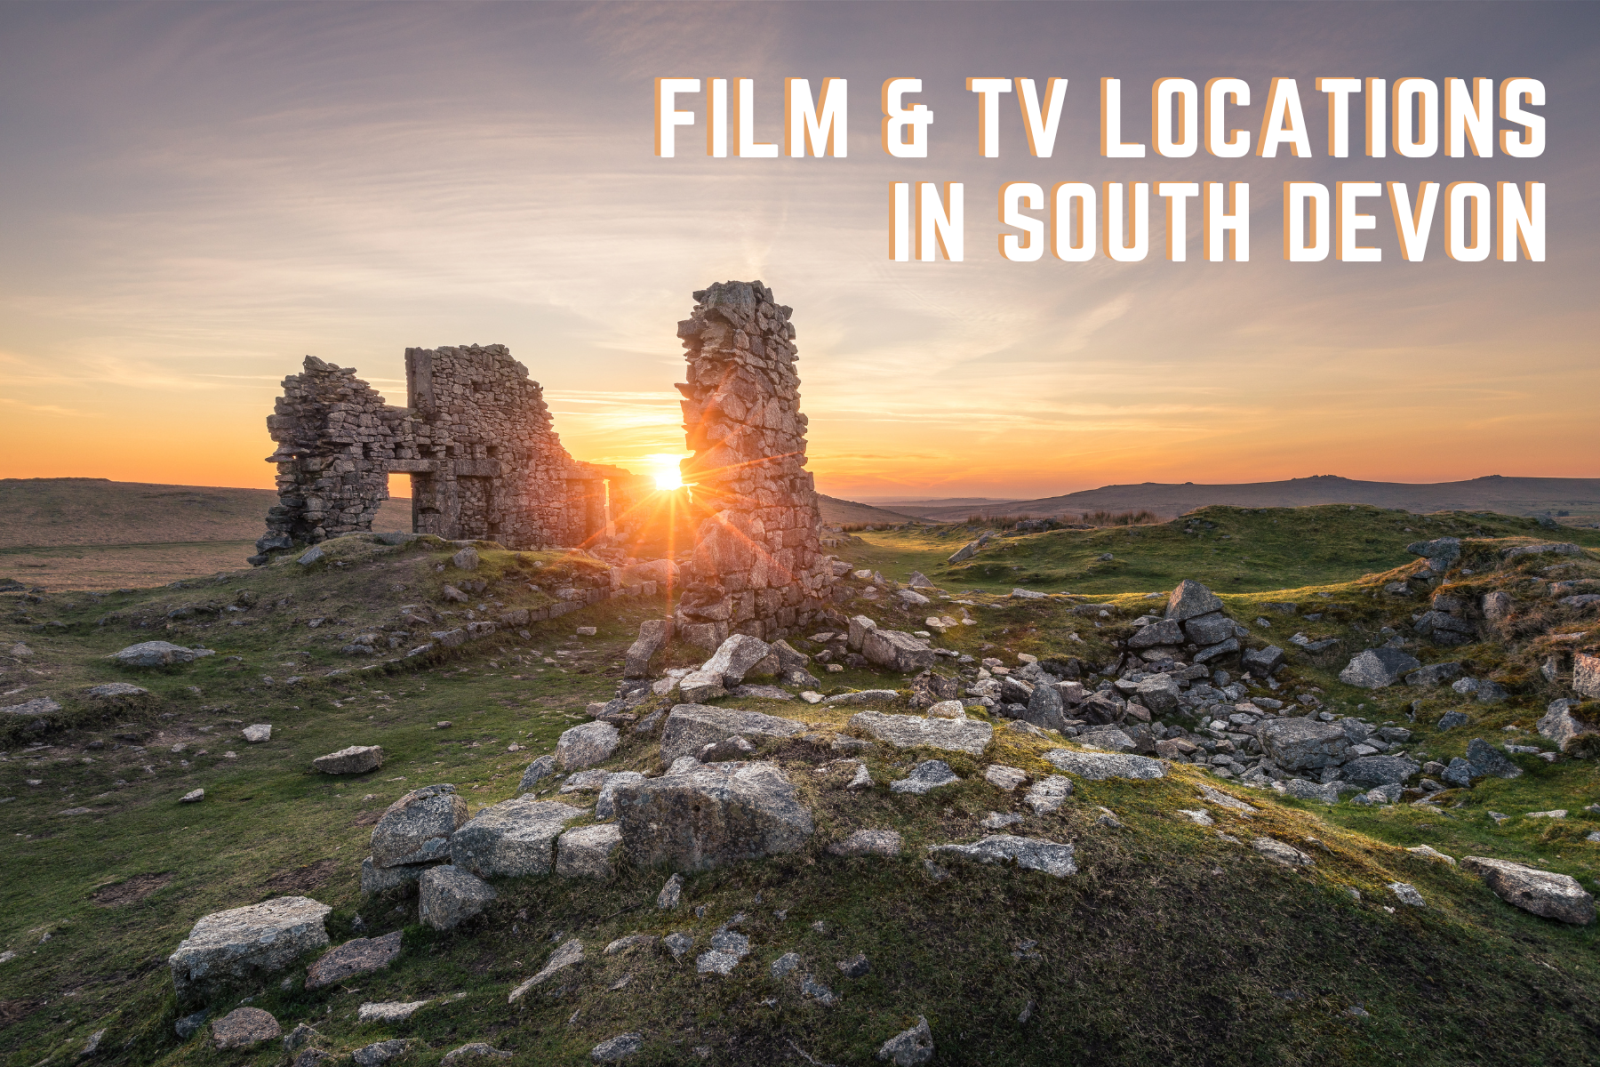 Film & TV locations in South Devon